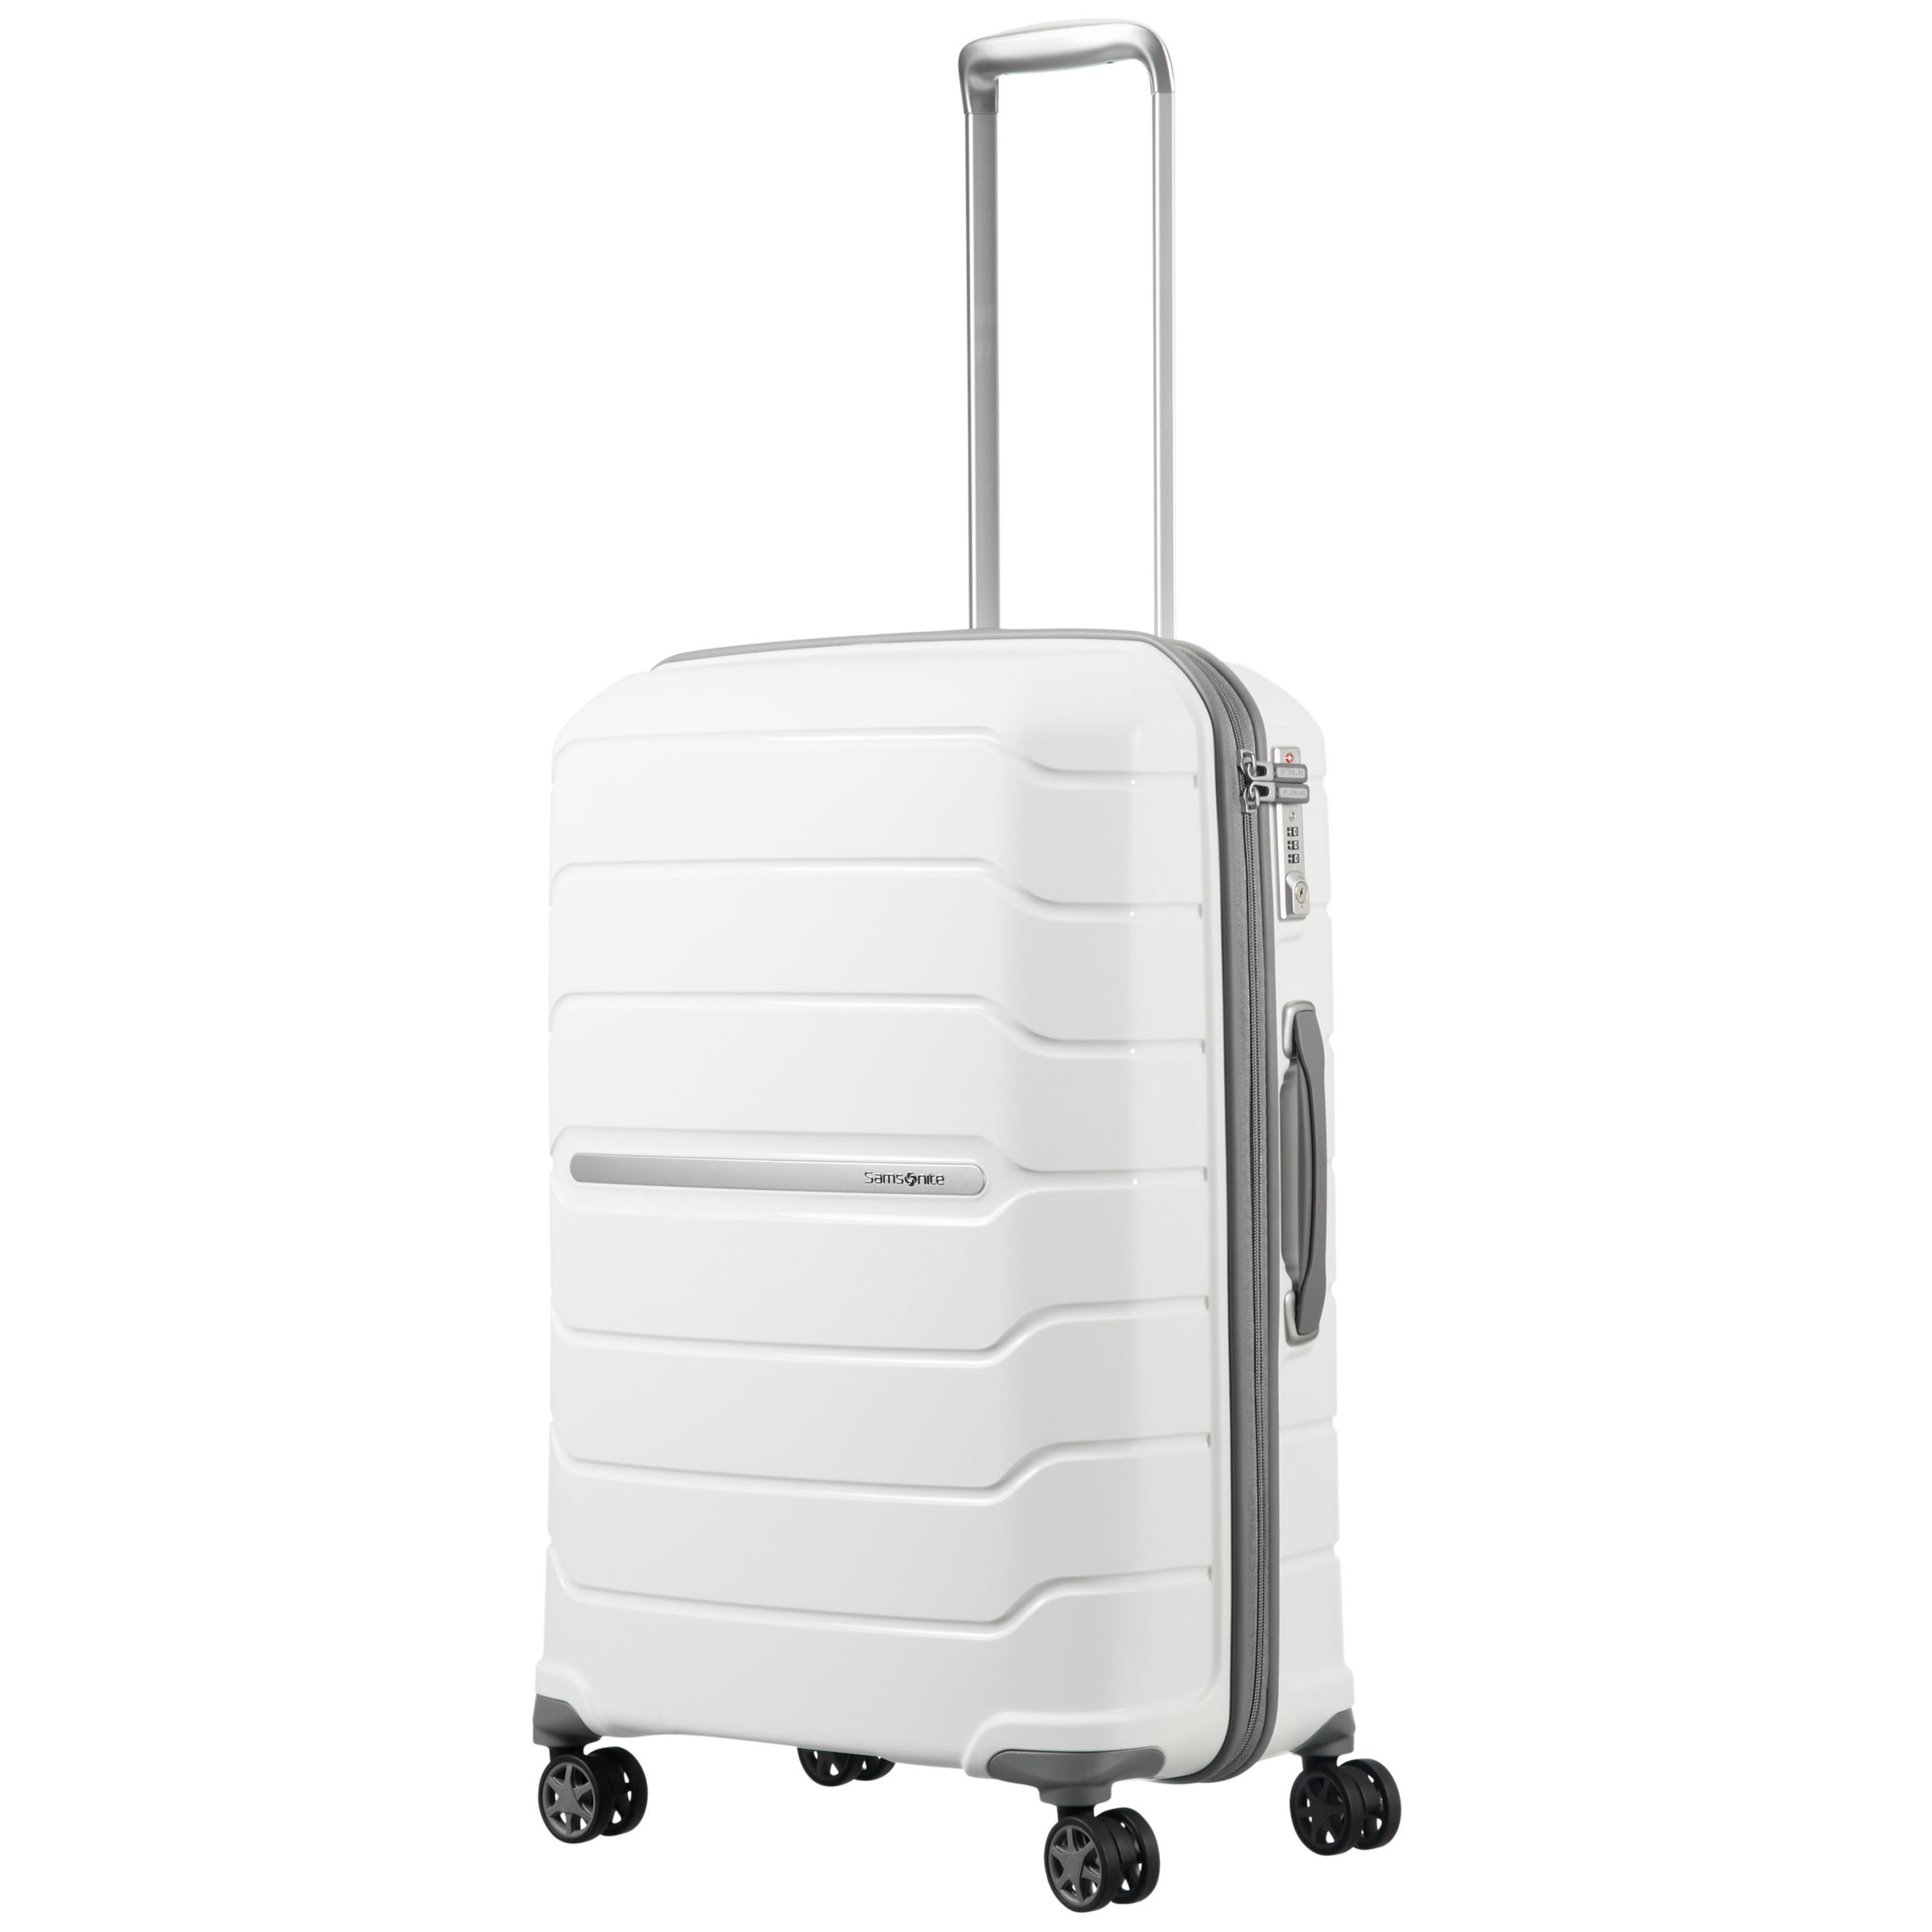 Samsonite Flux Spinner 4-Wheel 68cm Medium Suitcase, White